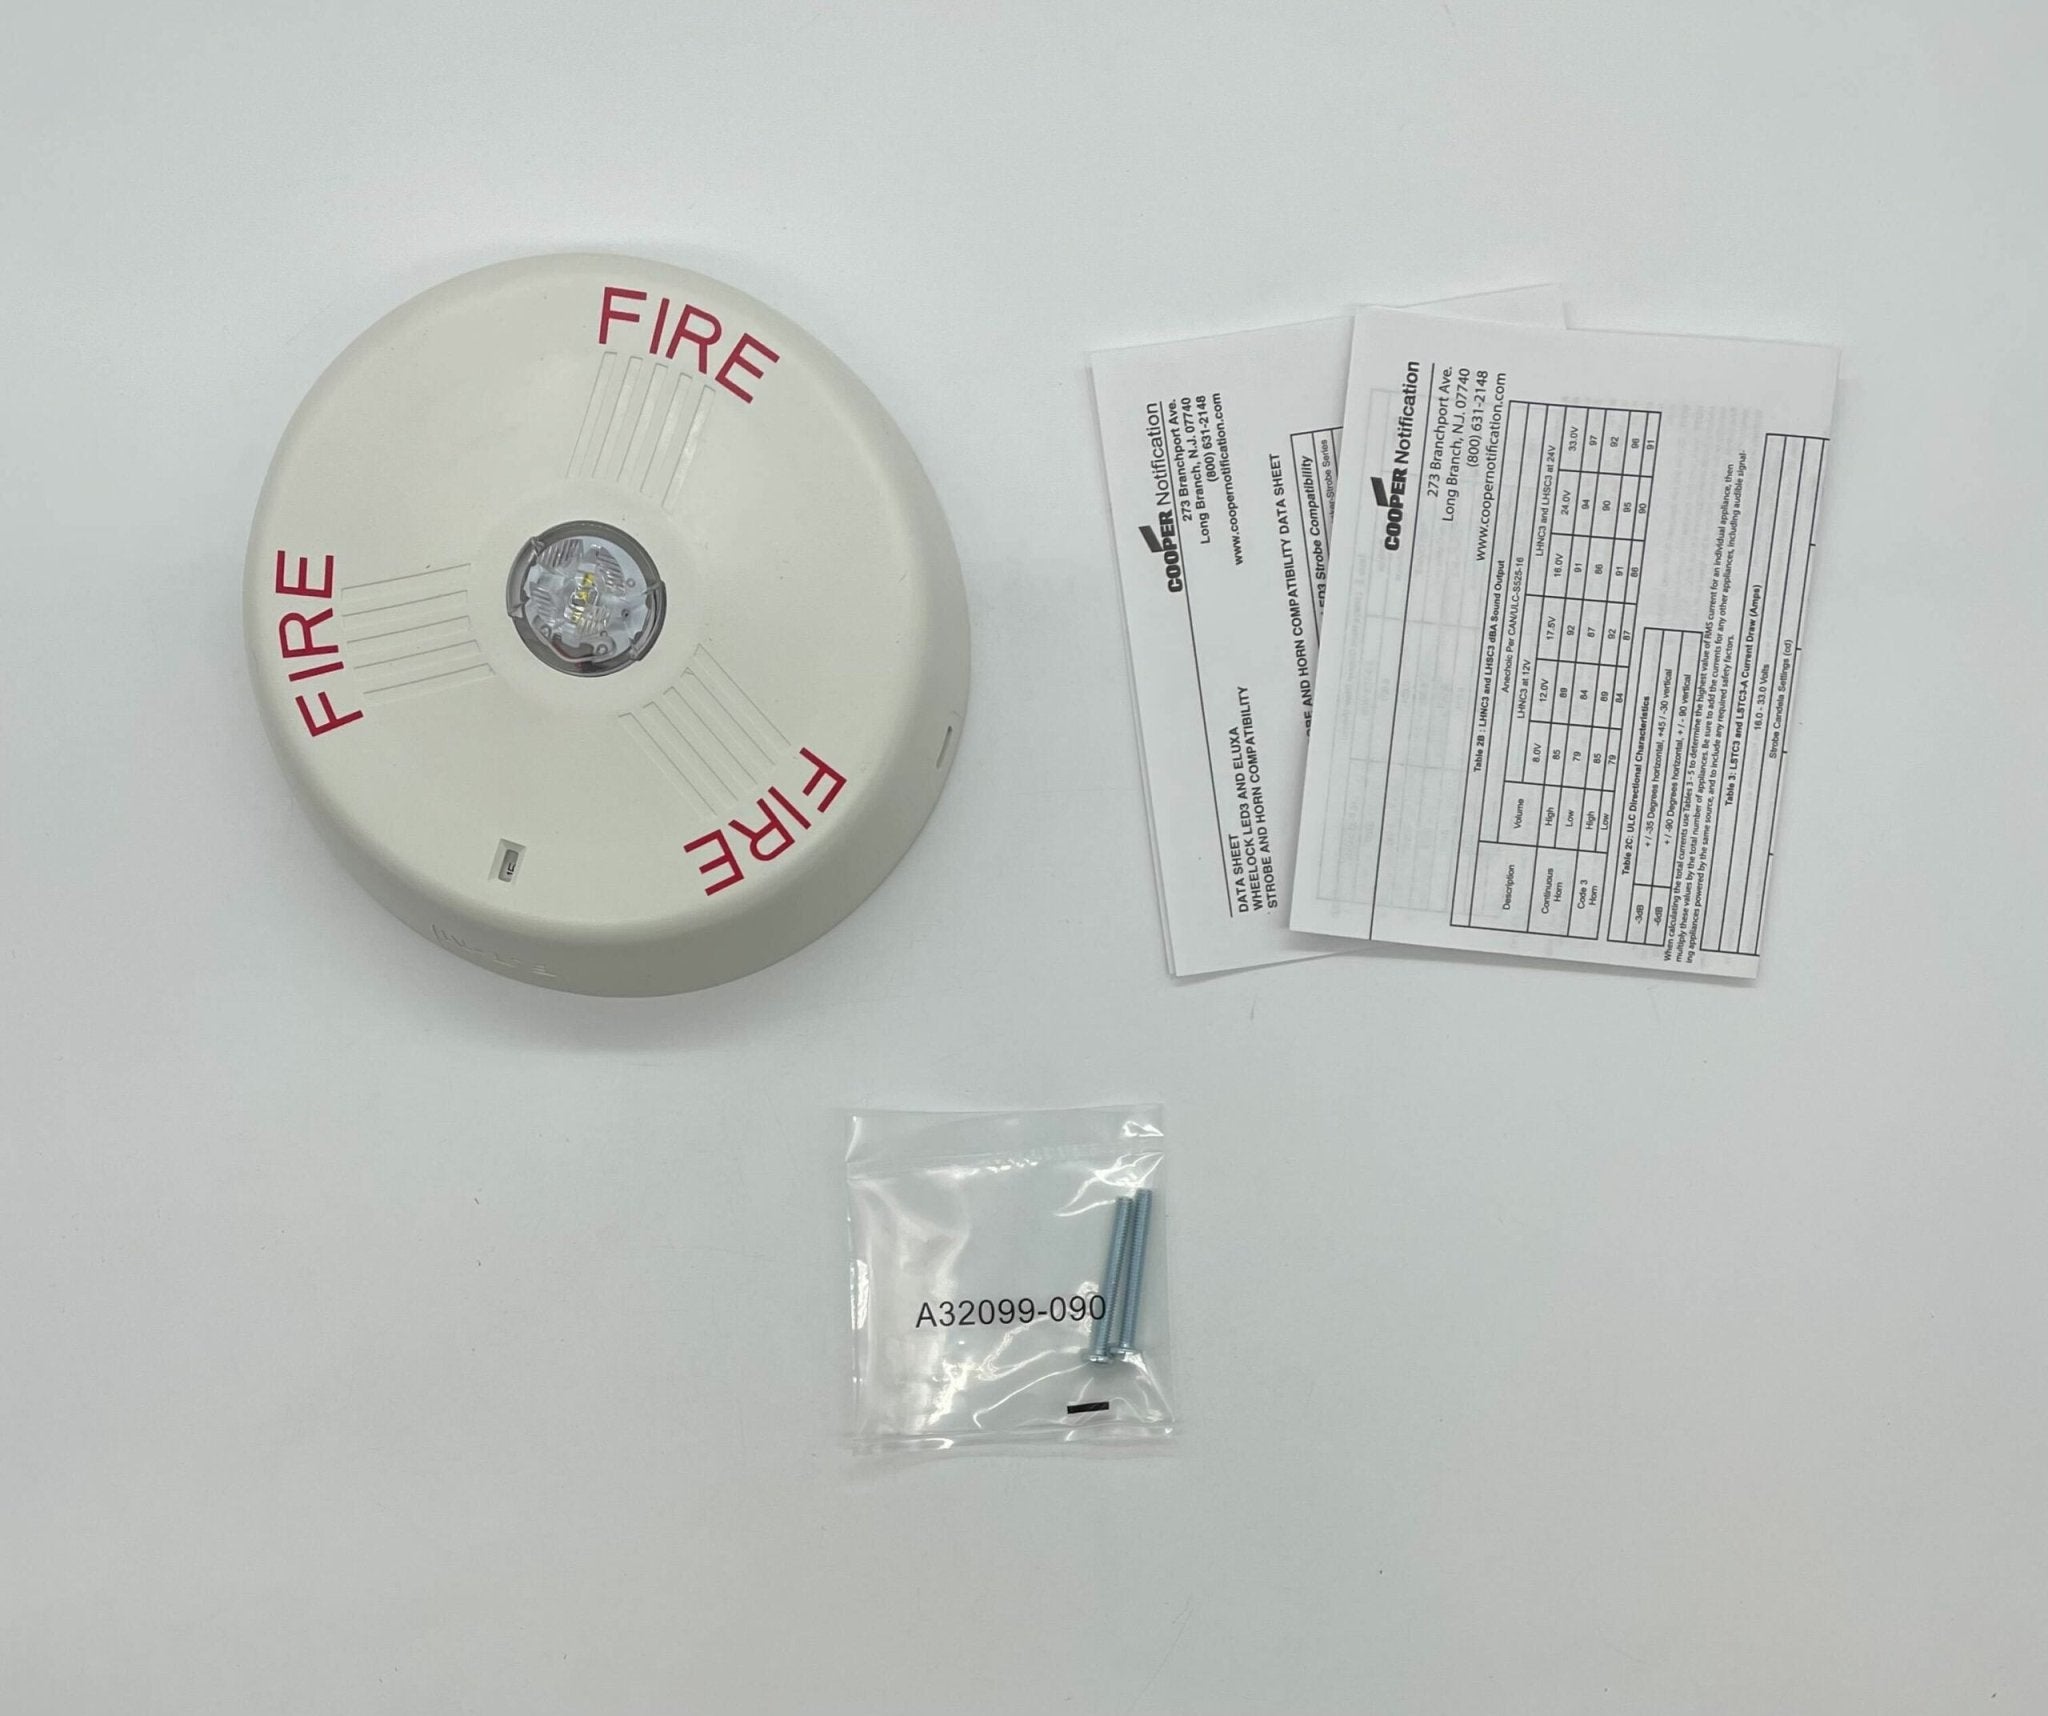 Wheelock LSTWC3 - The Fire Alarm Supplier